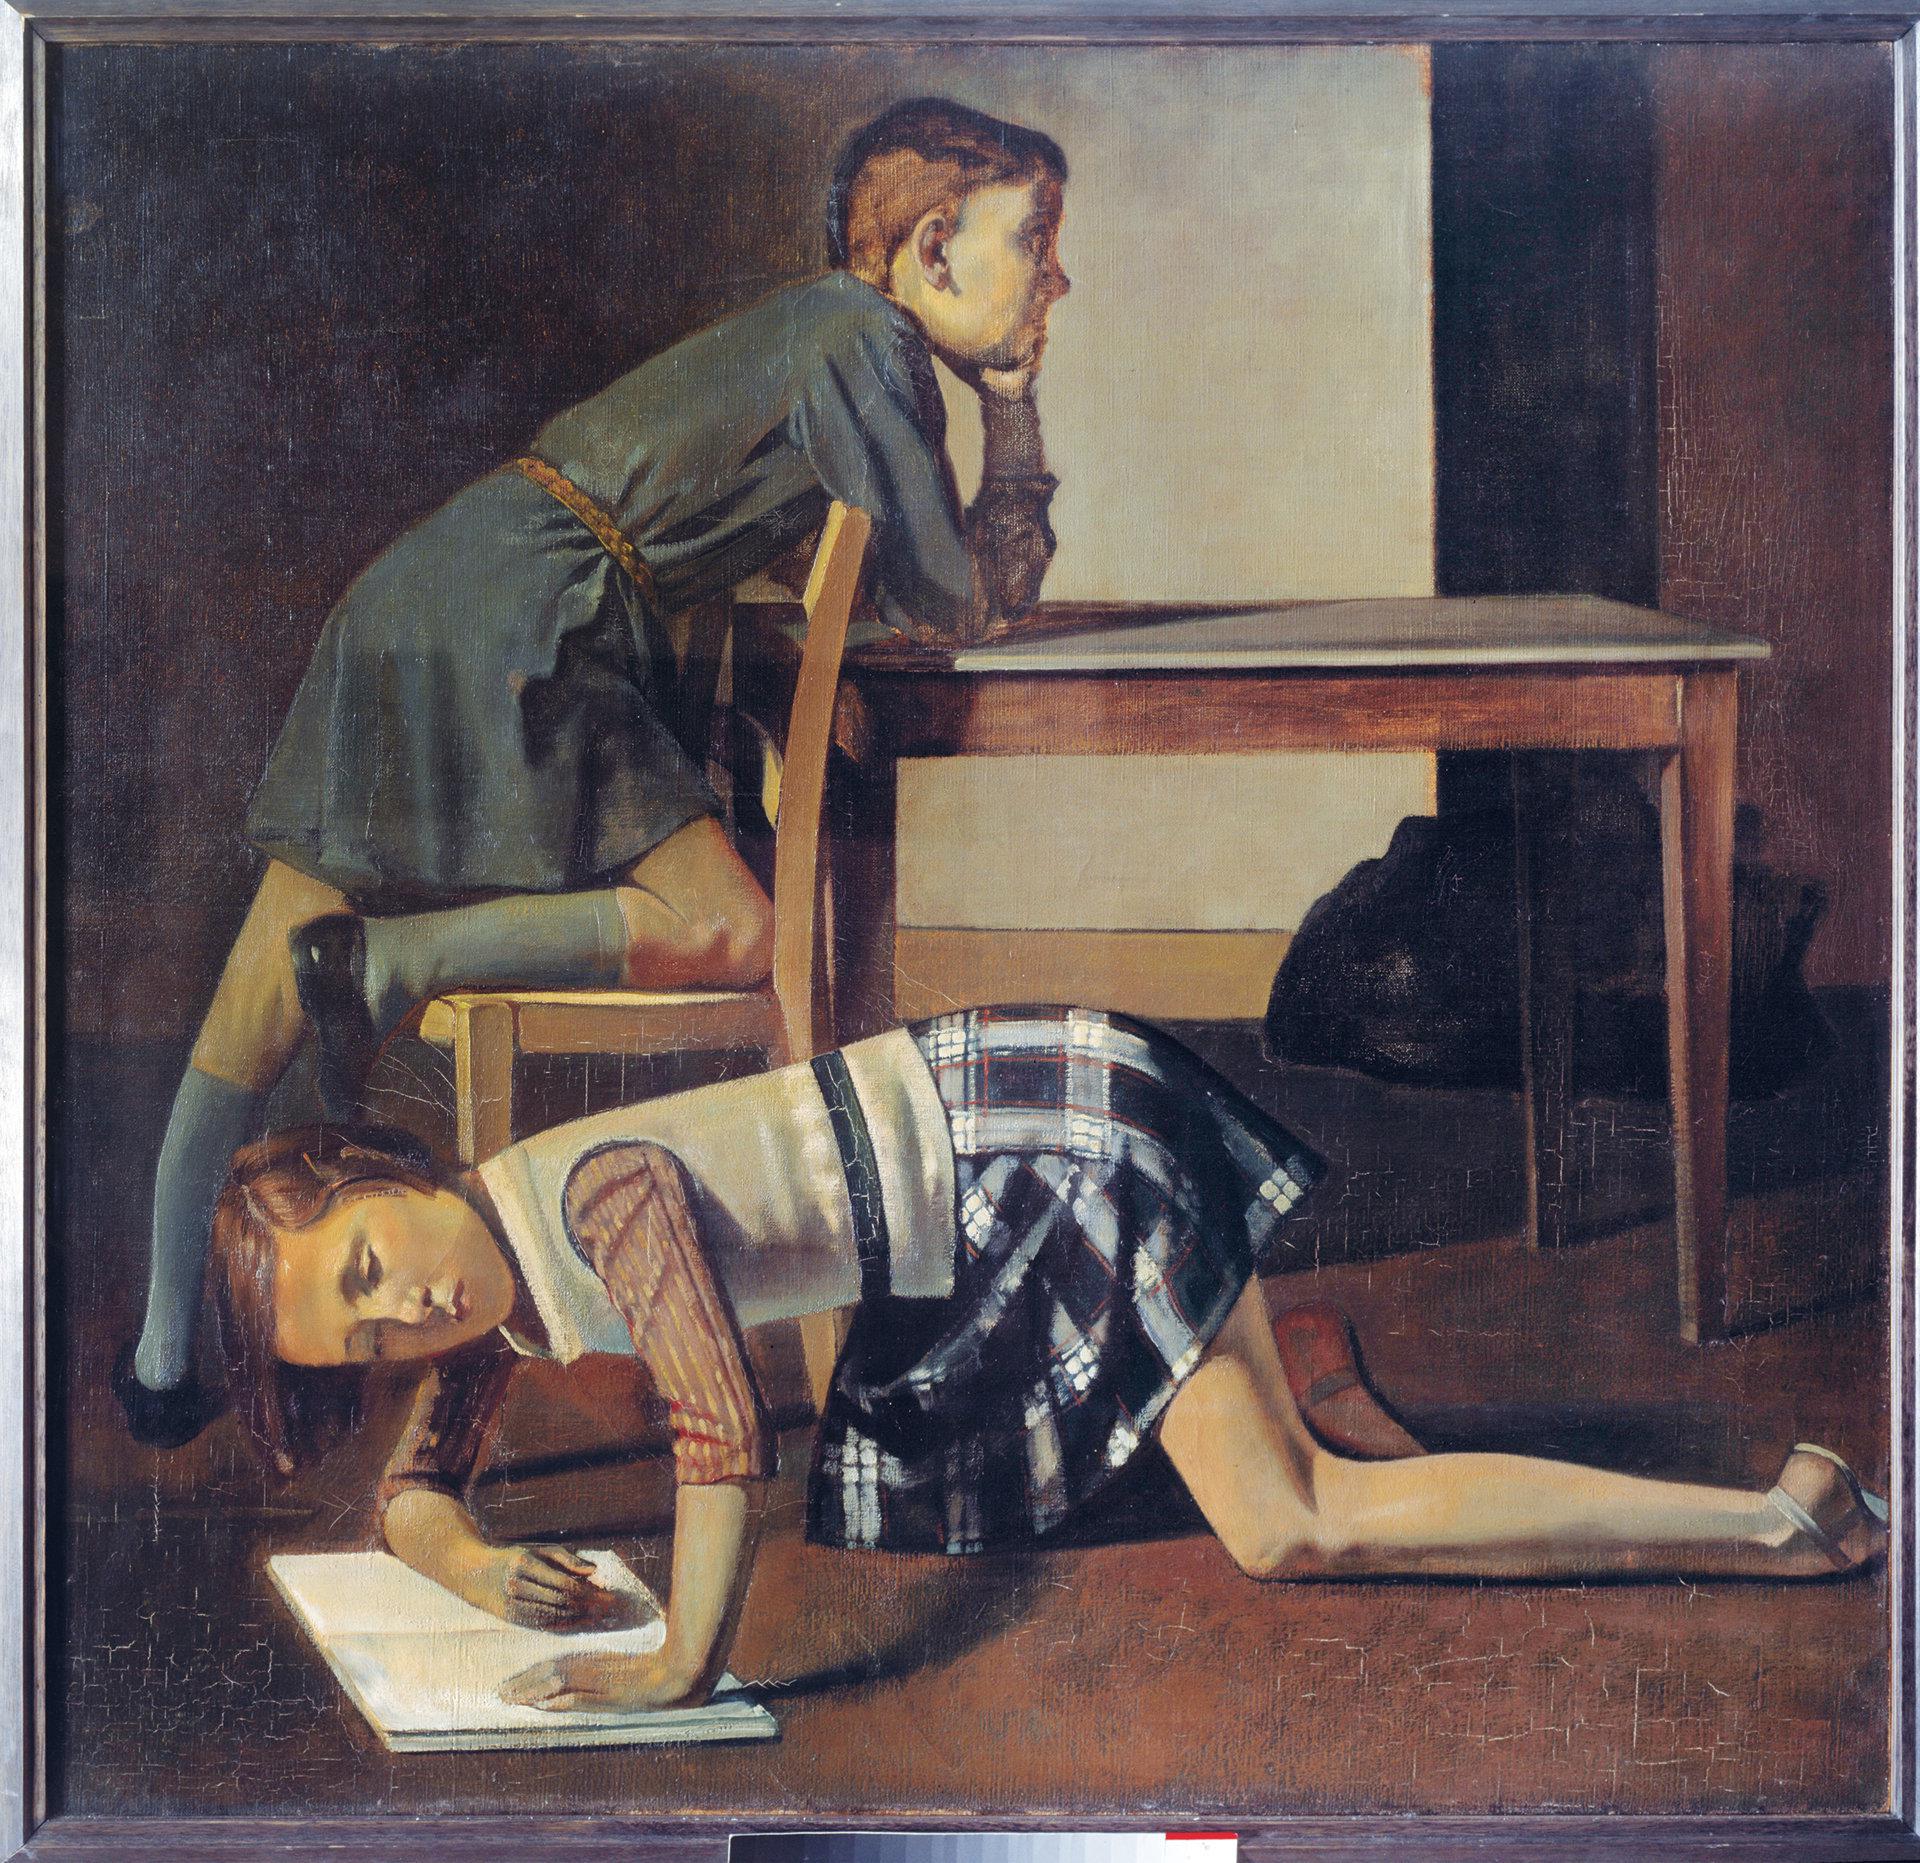 Balthus, 'Les Enfants Blanchard', 1937, olio su tela, Paris, Musée national Picasso © Balthus © MONDADORI PORTFOLIO/Leemage/Paris, Musée Picasso/Photo Josse (Scuderie del Quirinale)